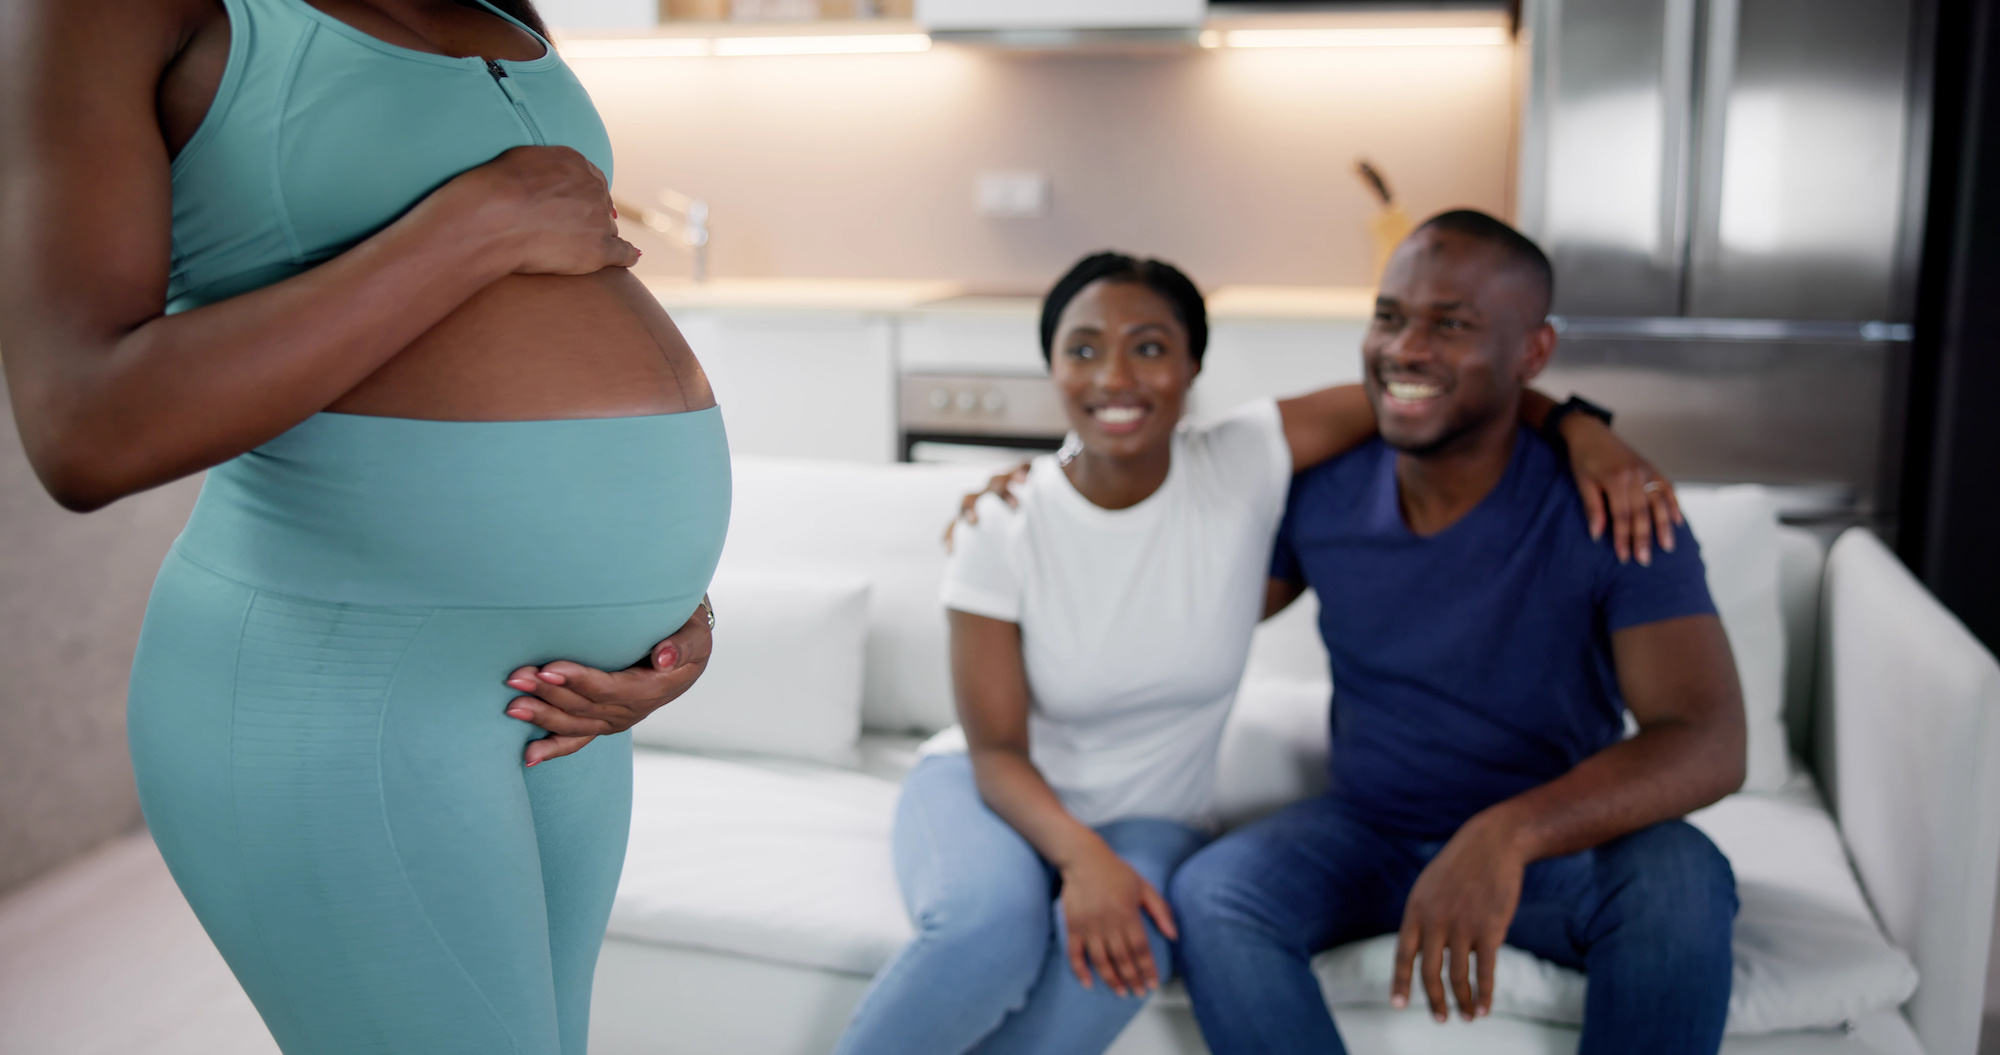 Traditional Surrogacy vs. Gestational Surrogacy